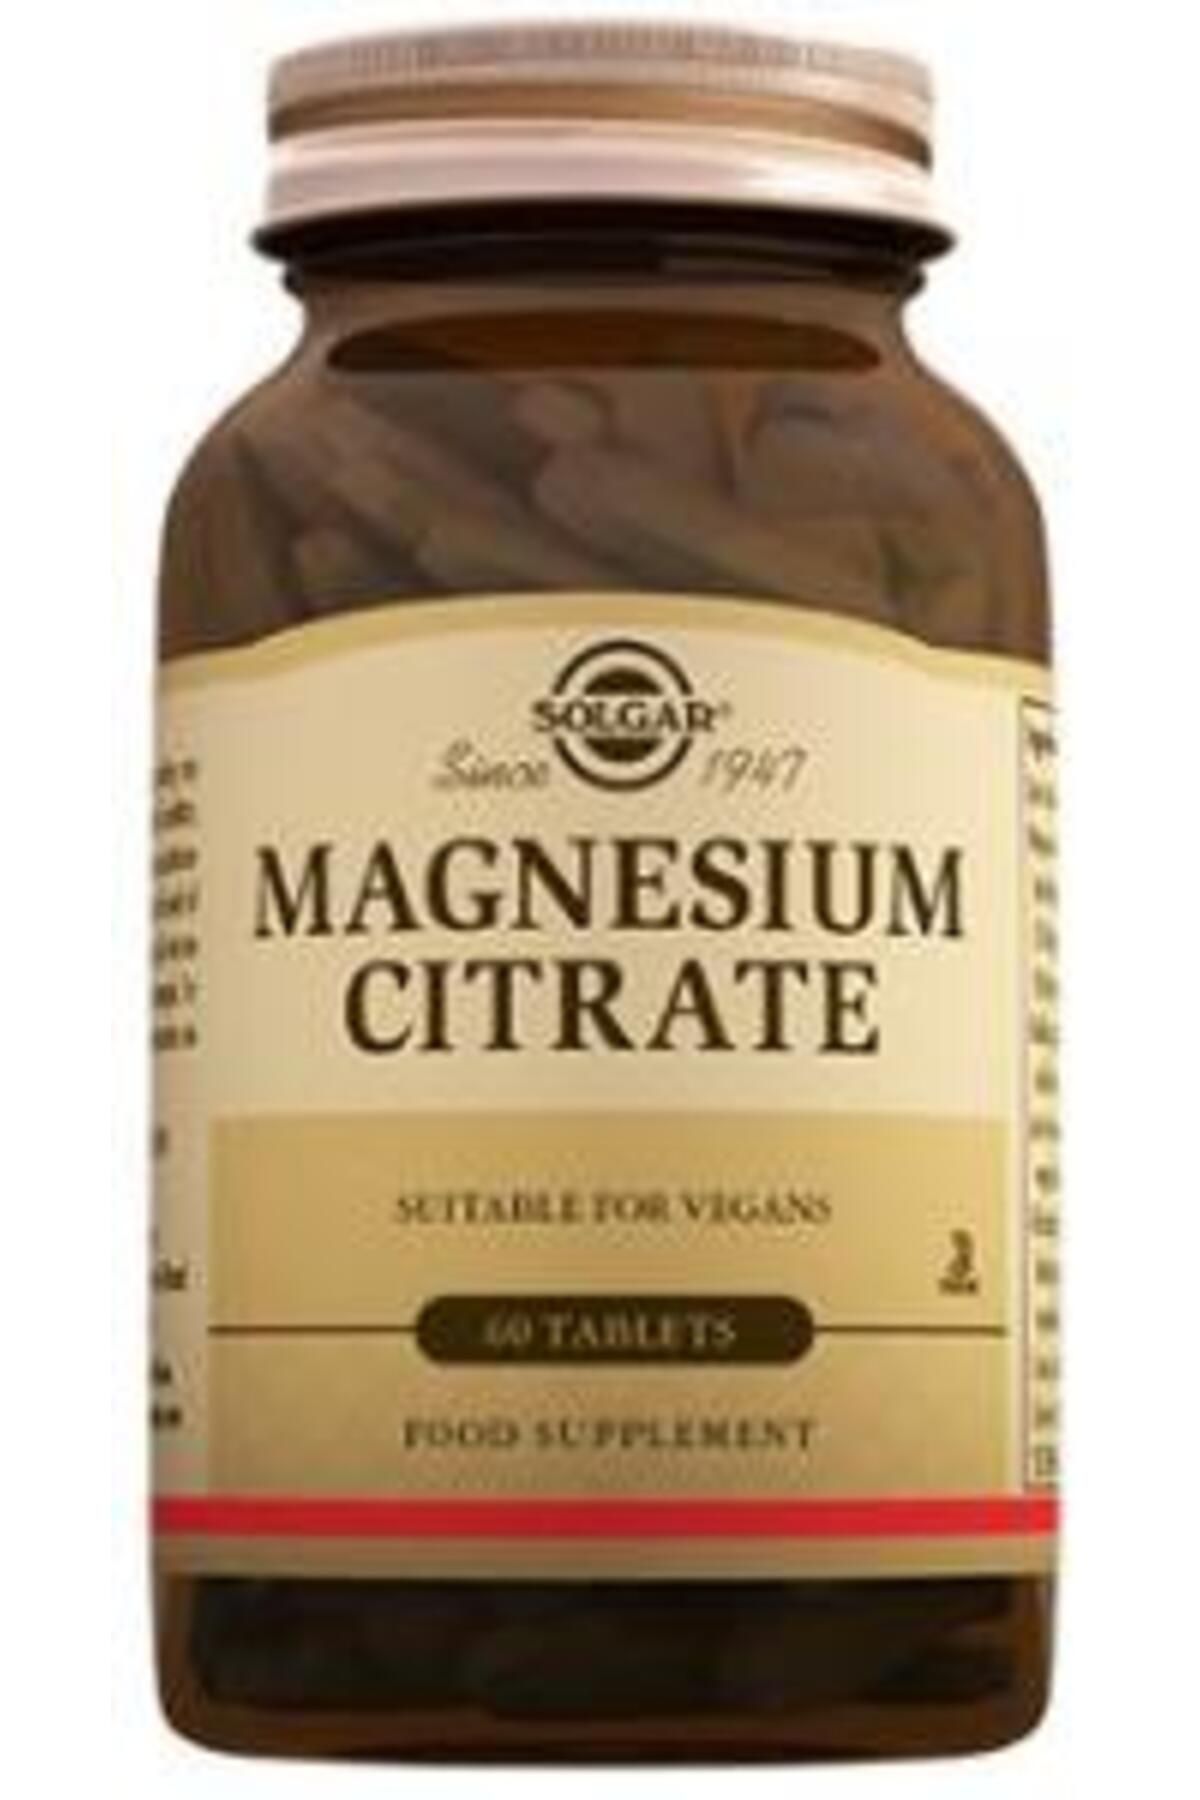 Solgar Magnesium Citrate 200 Mg 60 Tablet Mineral